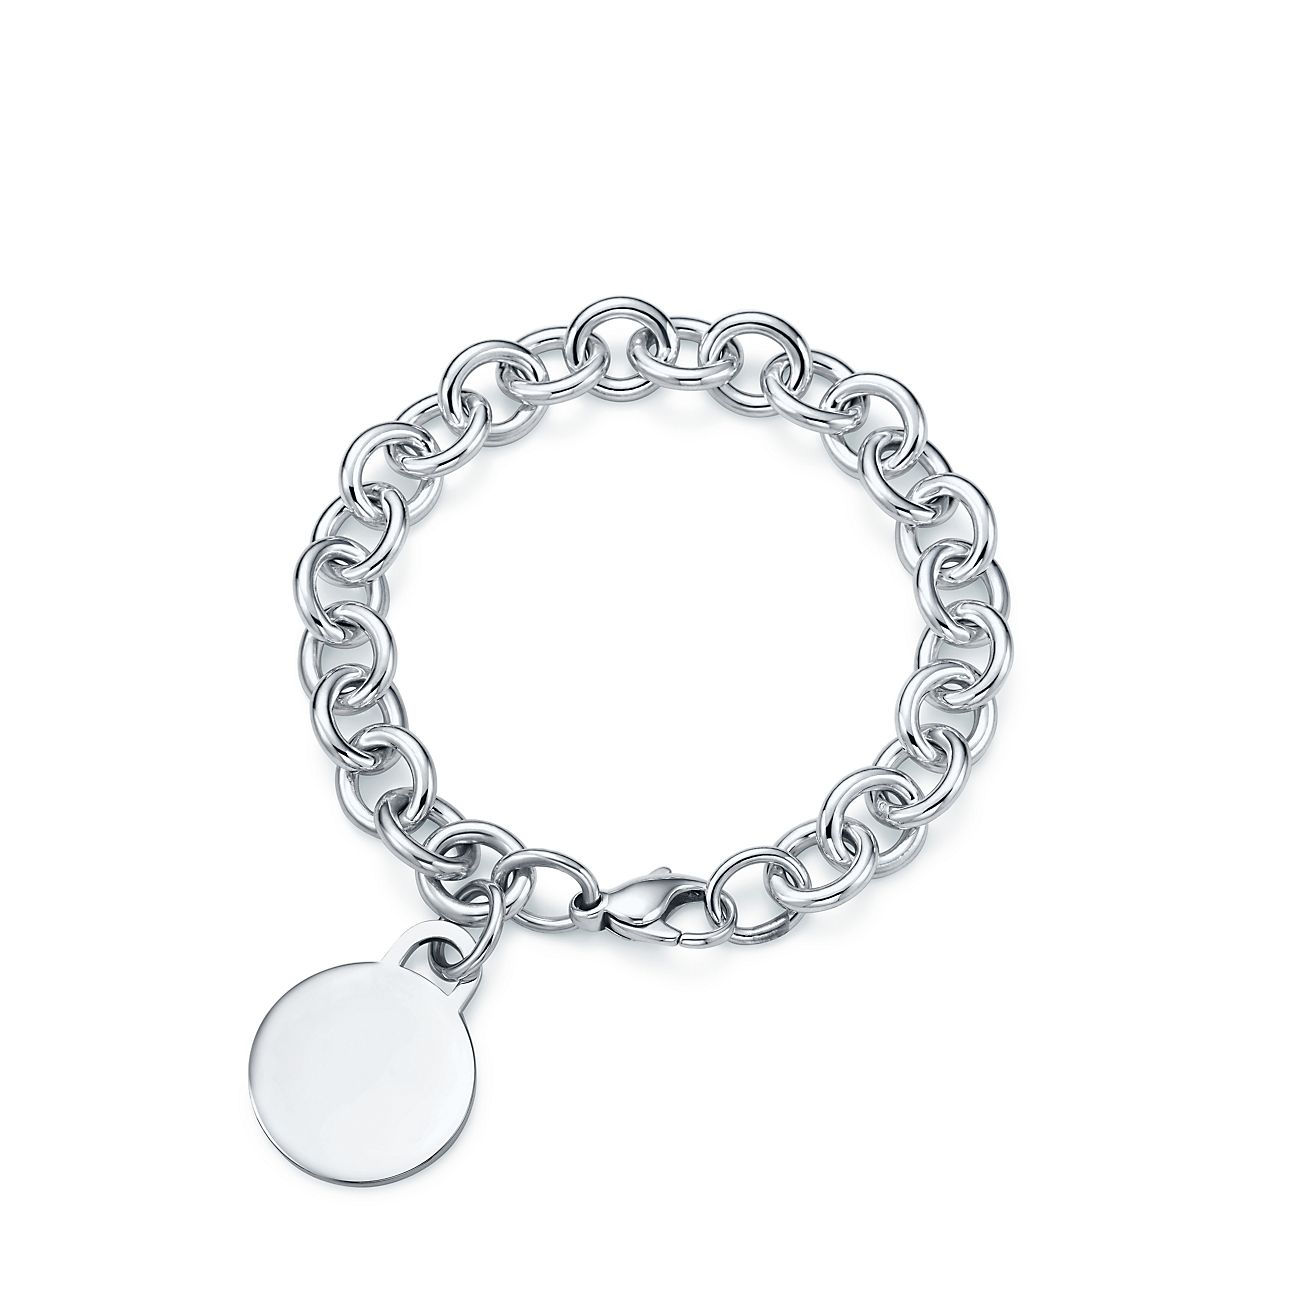 tiffany bracelet charms